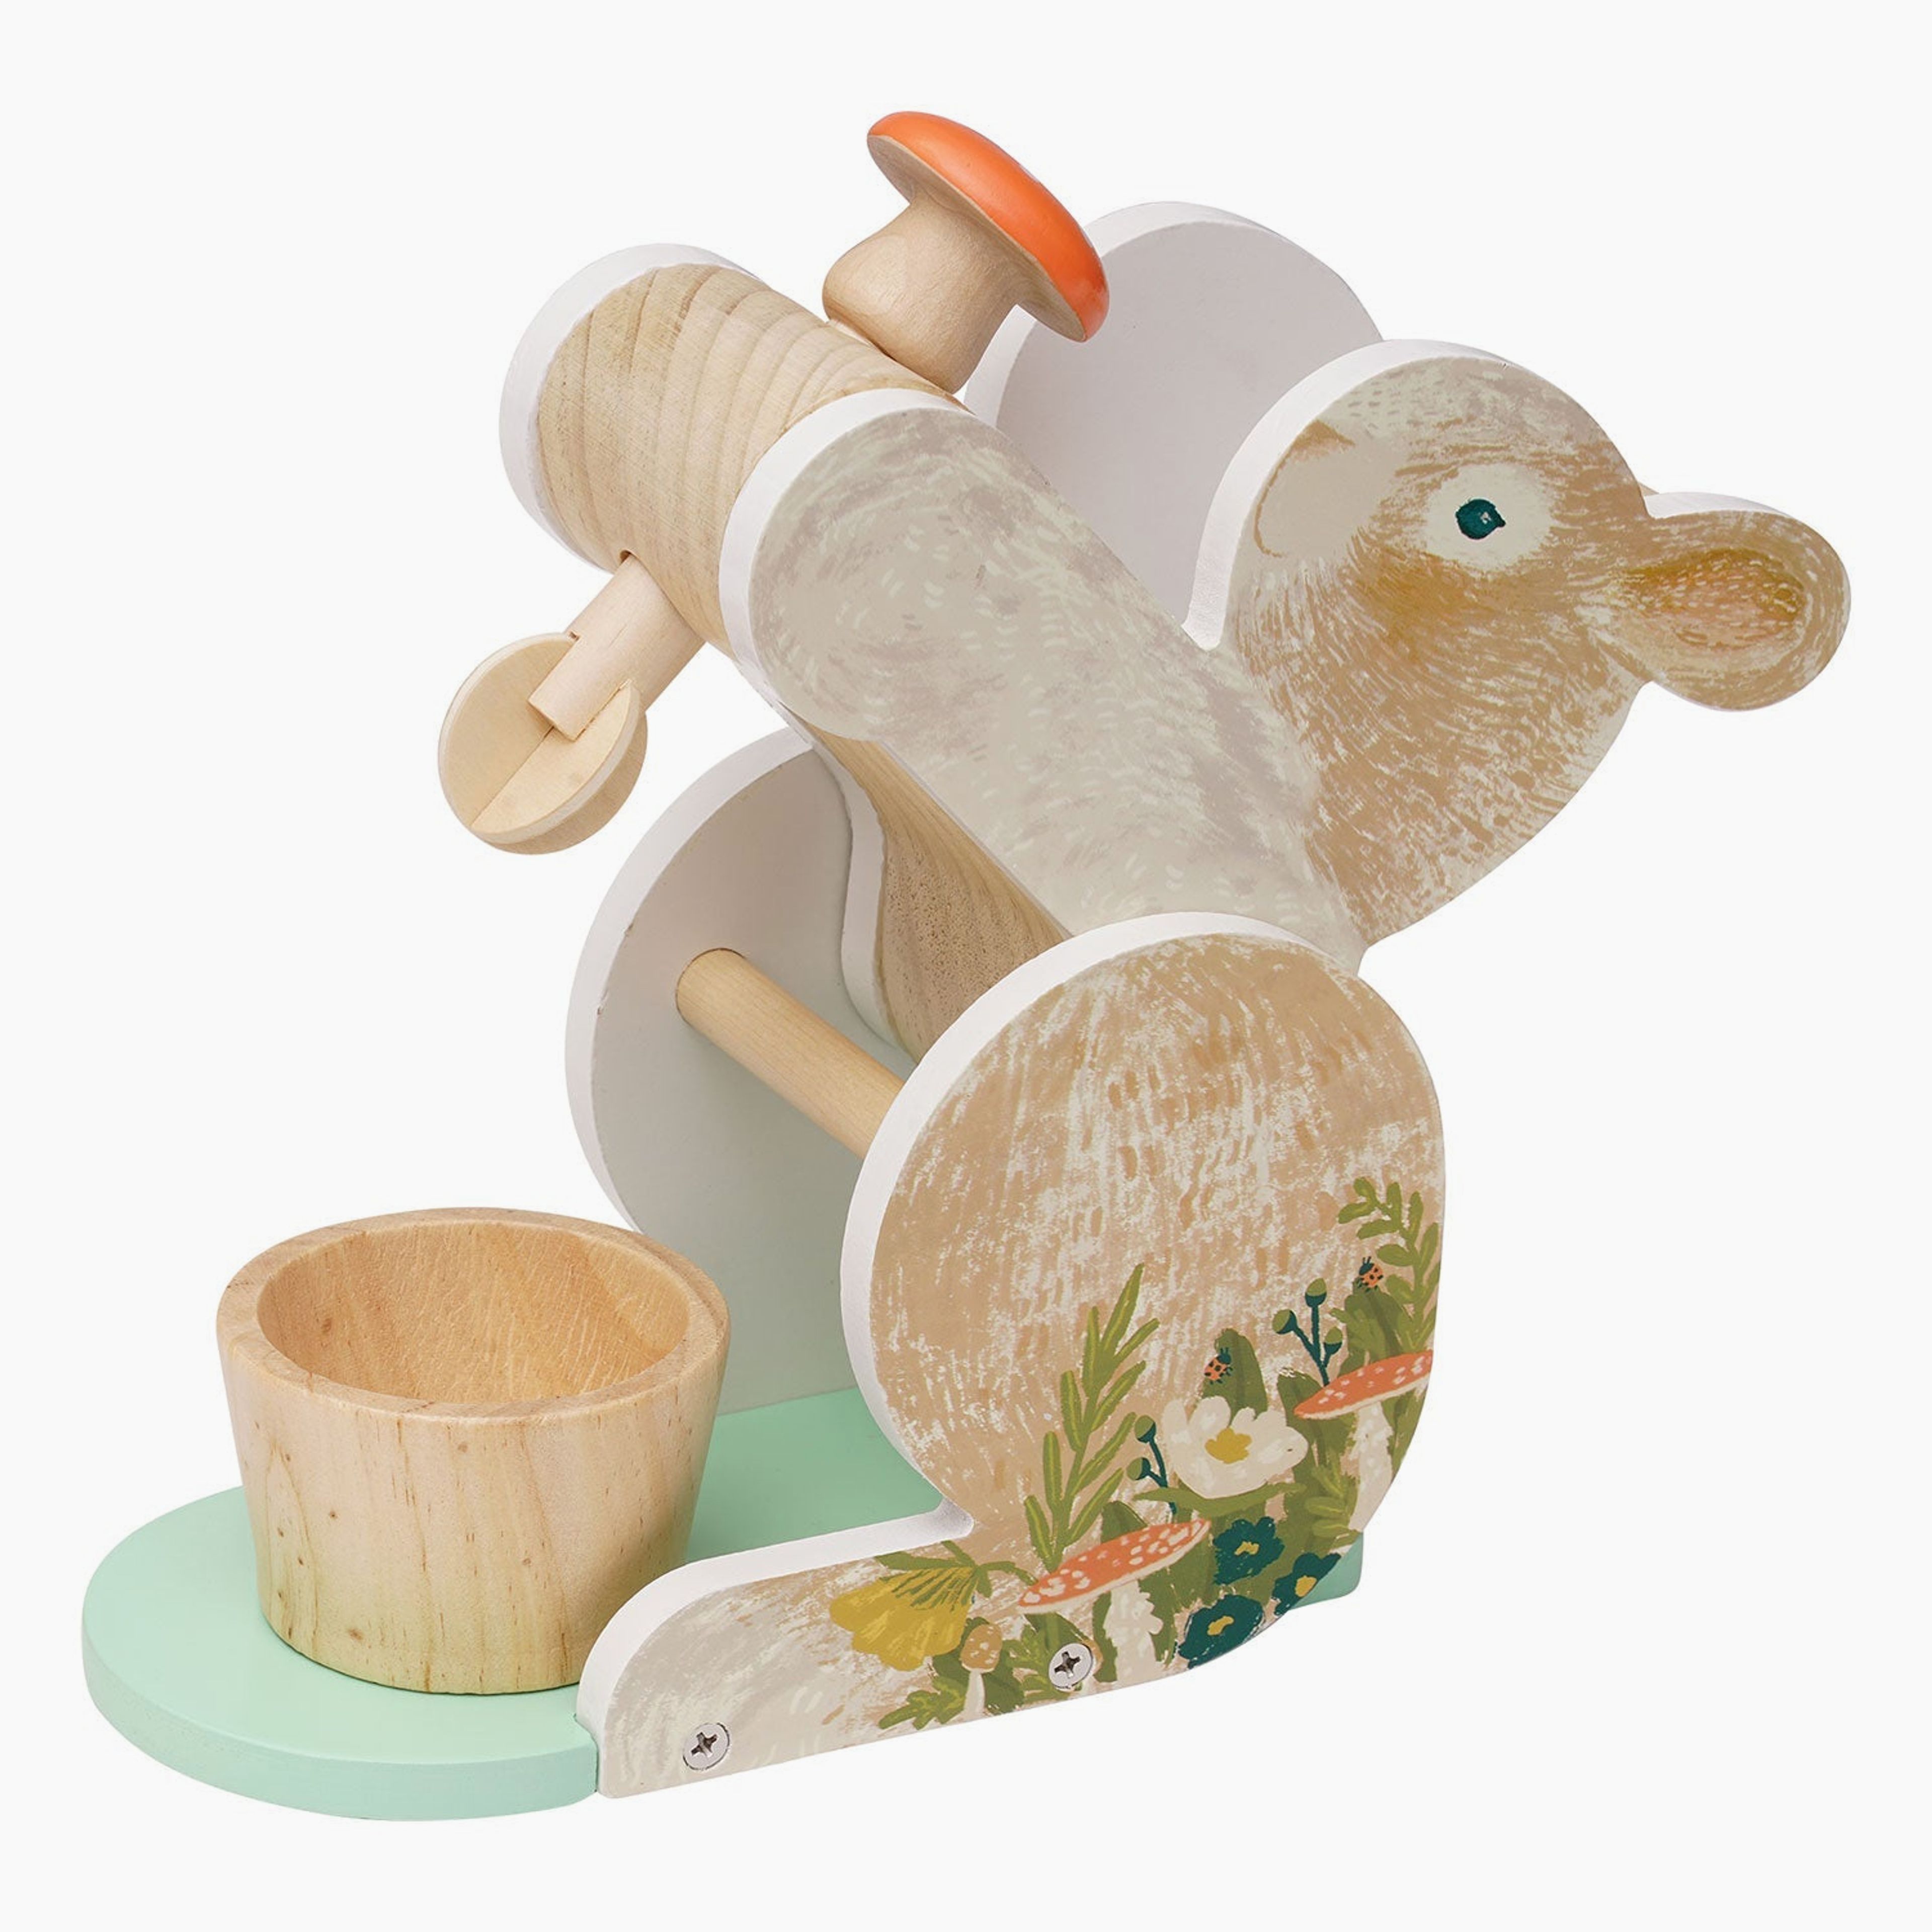 Bunny Hop Mixer by Manhattan Toy